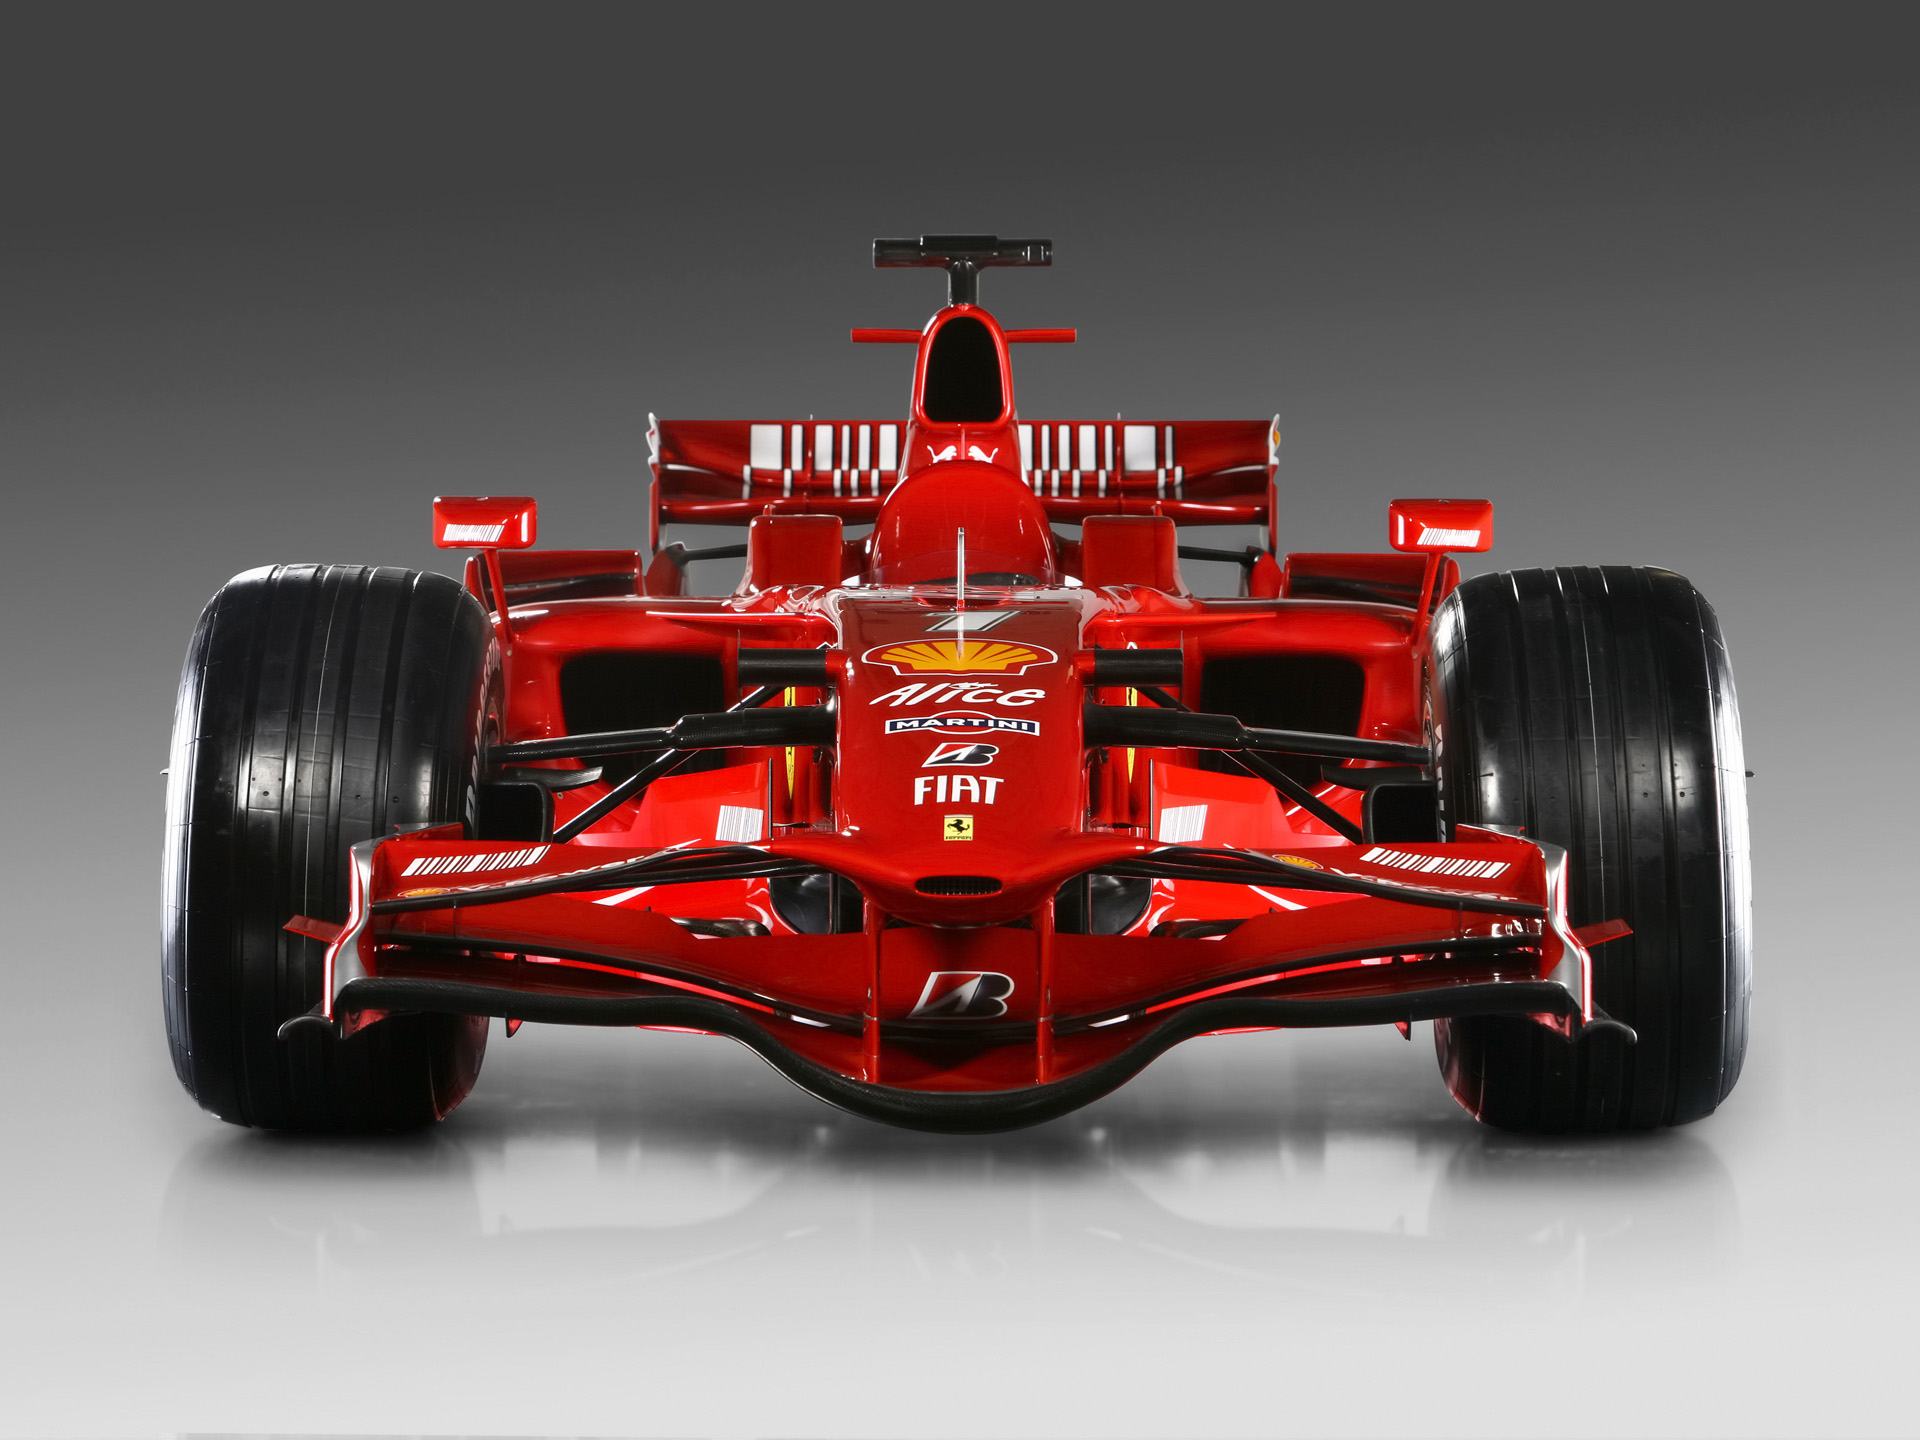 Ferrari F1 HD Wallpaper | Free Download from wallpaperzet.